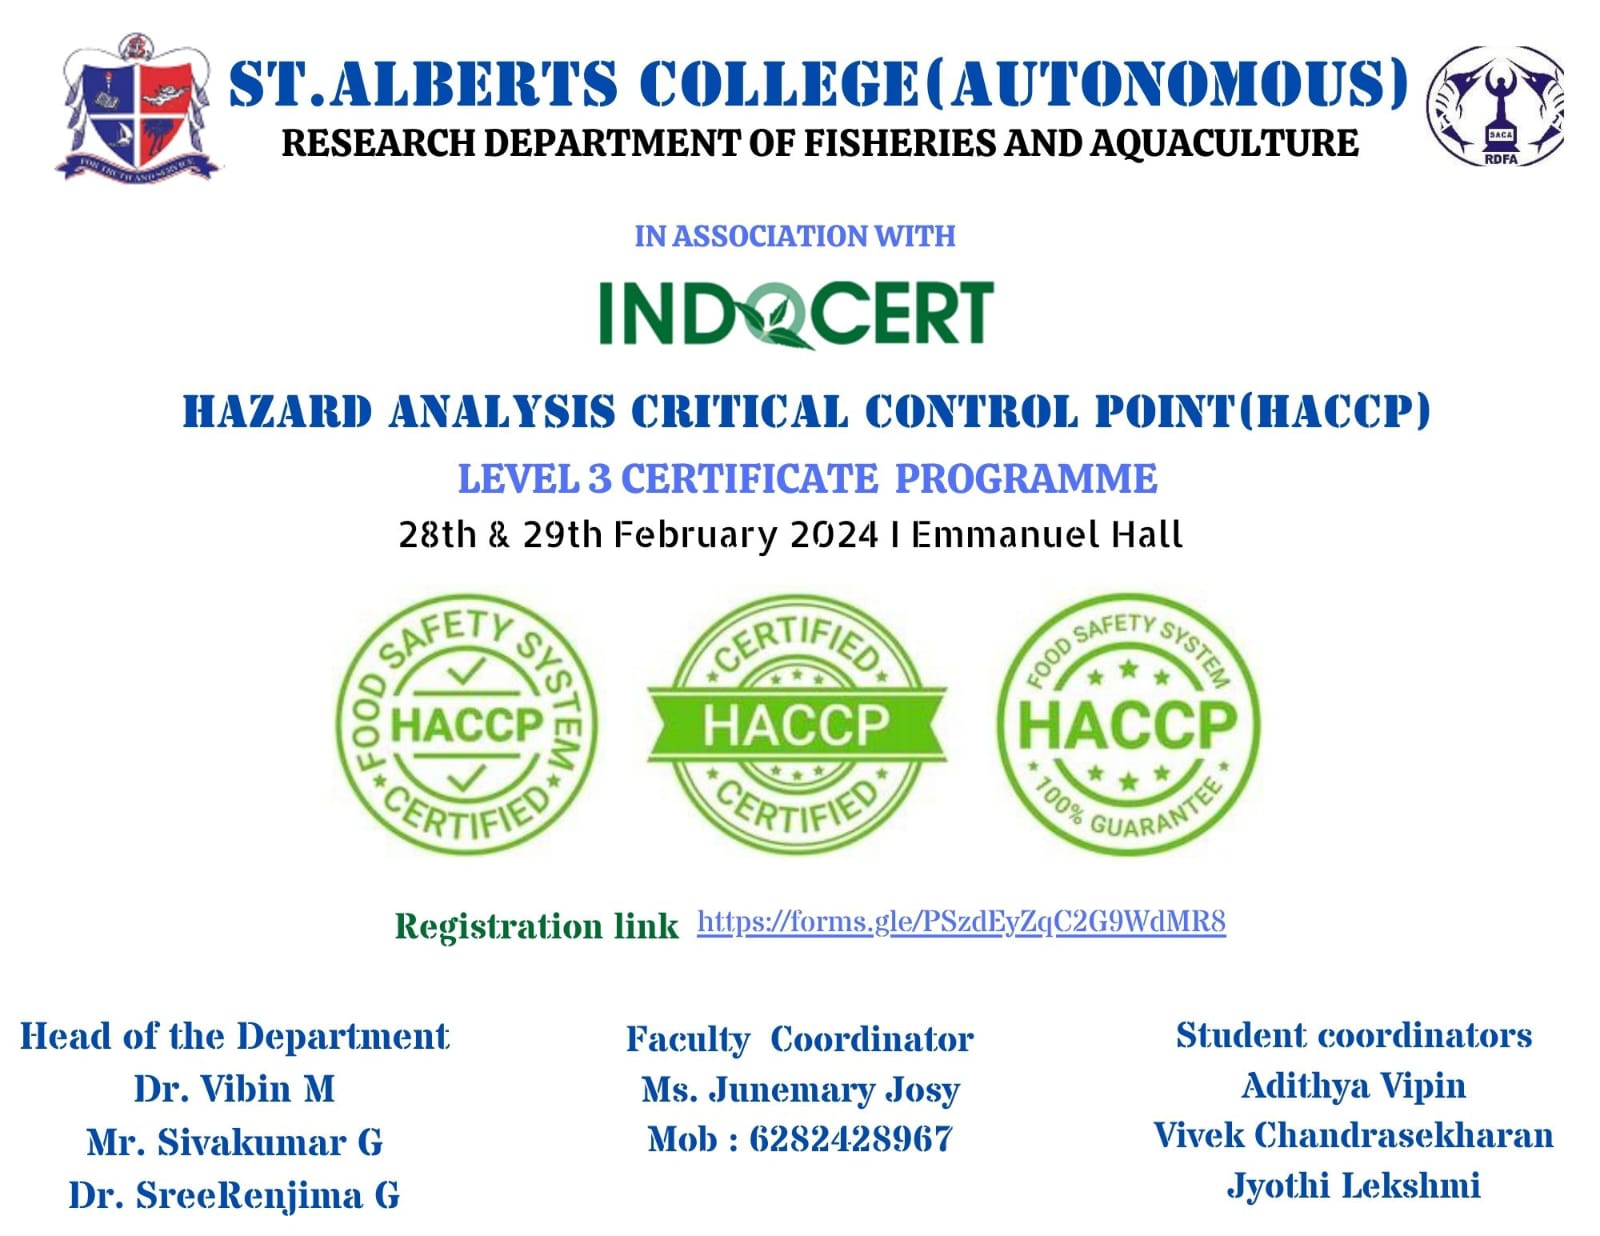 HAZARD ANALYSIS CRITICAL CONTROL POINT (HACCP)